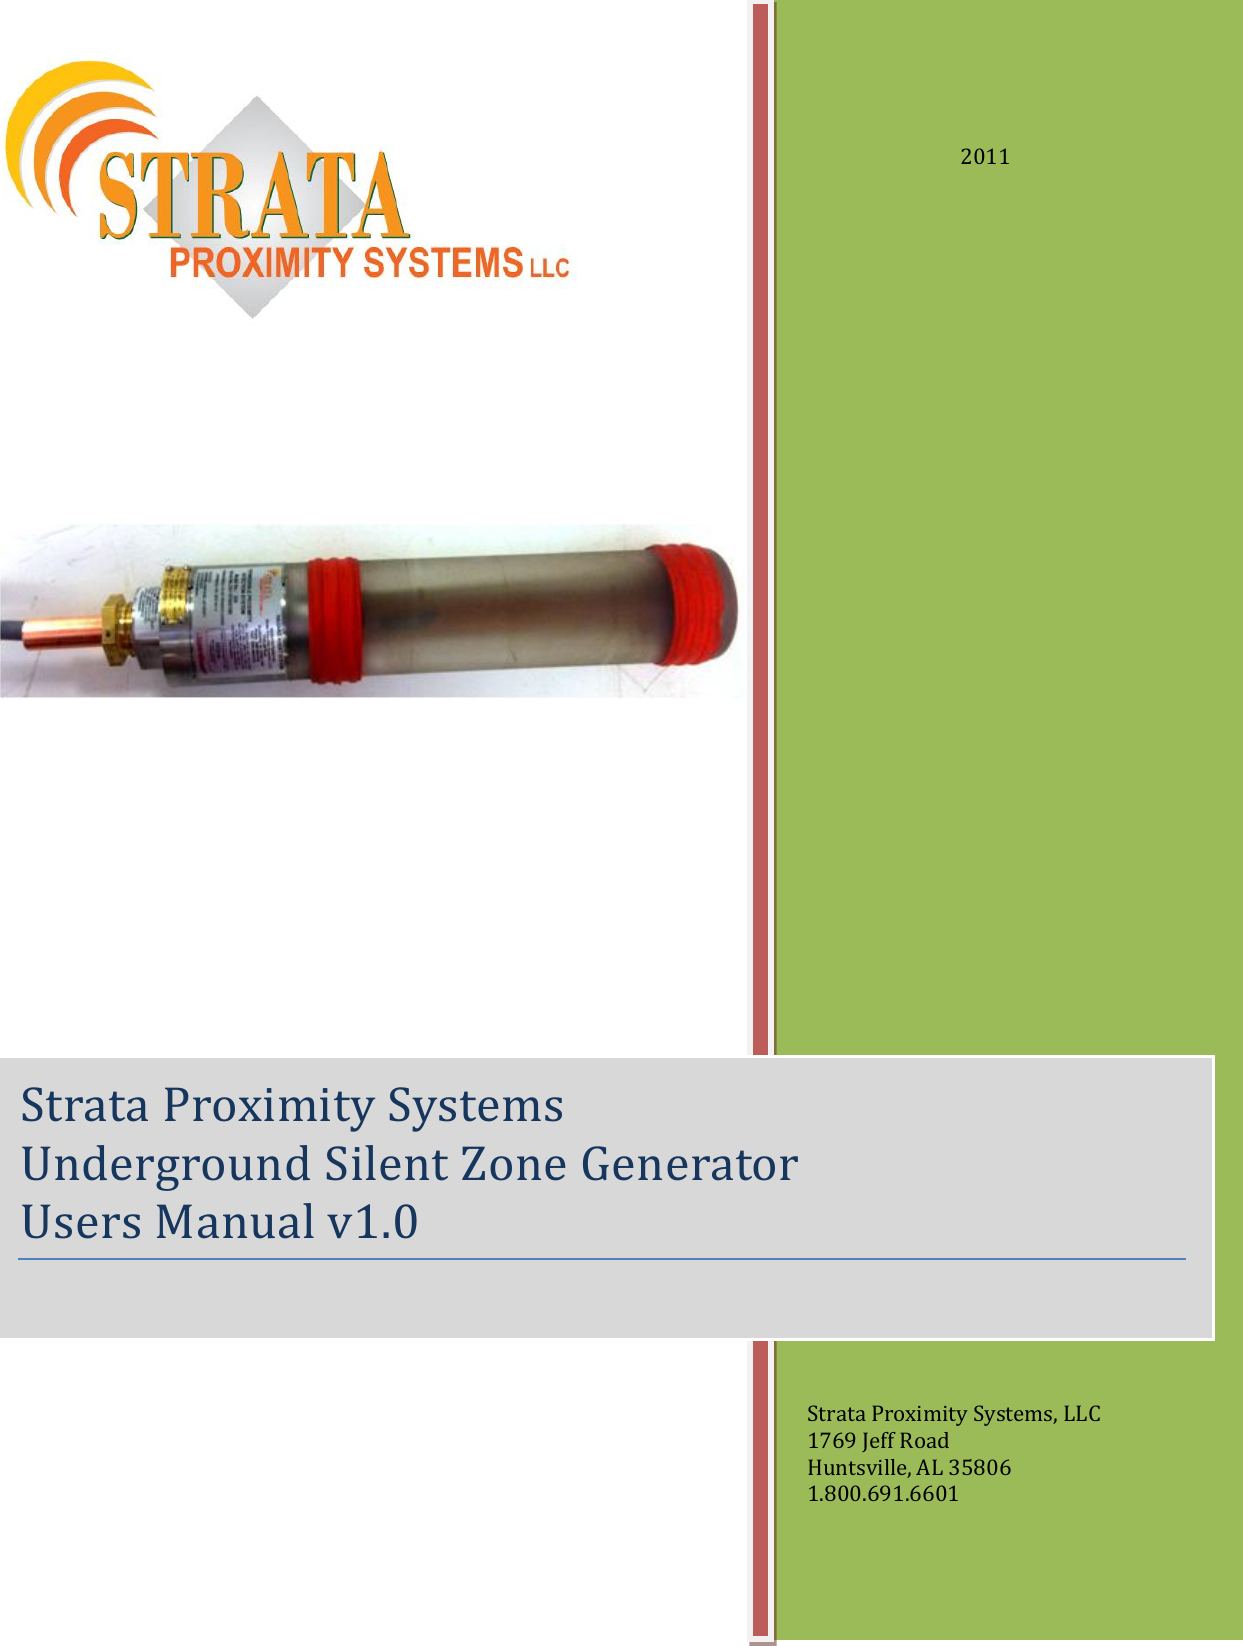                                     Strata Proximity Systems Underground Silent Zone Generator     Users Manual v1.0   2011 Strata Proximity Systems, LLC 1769 Jeff Road Huntsville, AL 35806 1.800.691.6601 